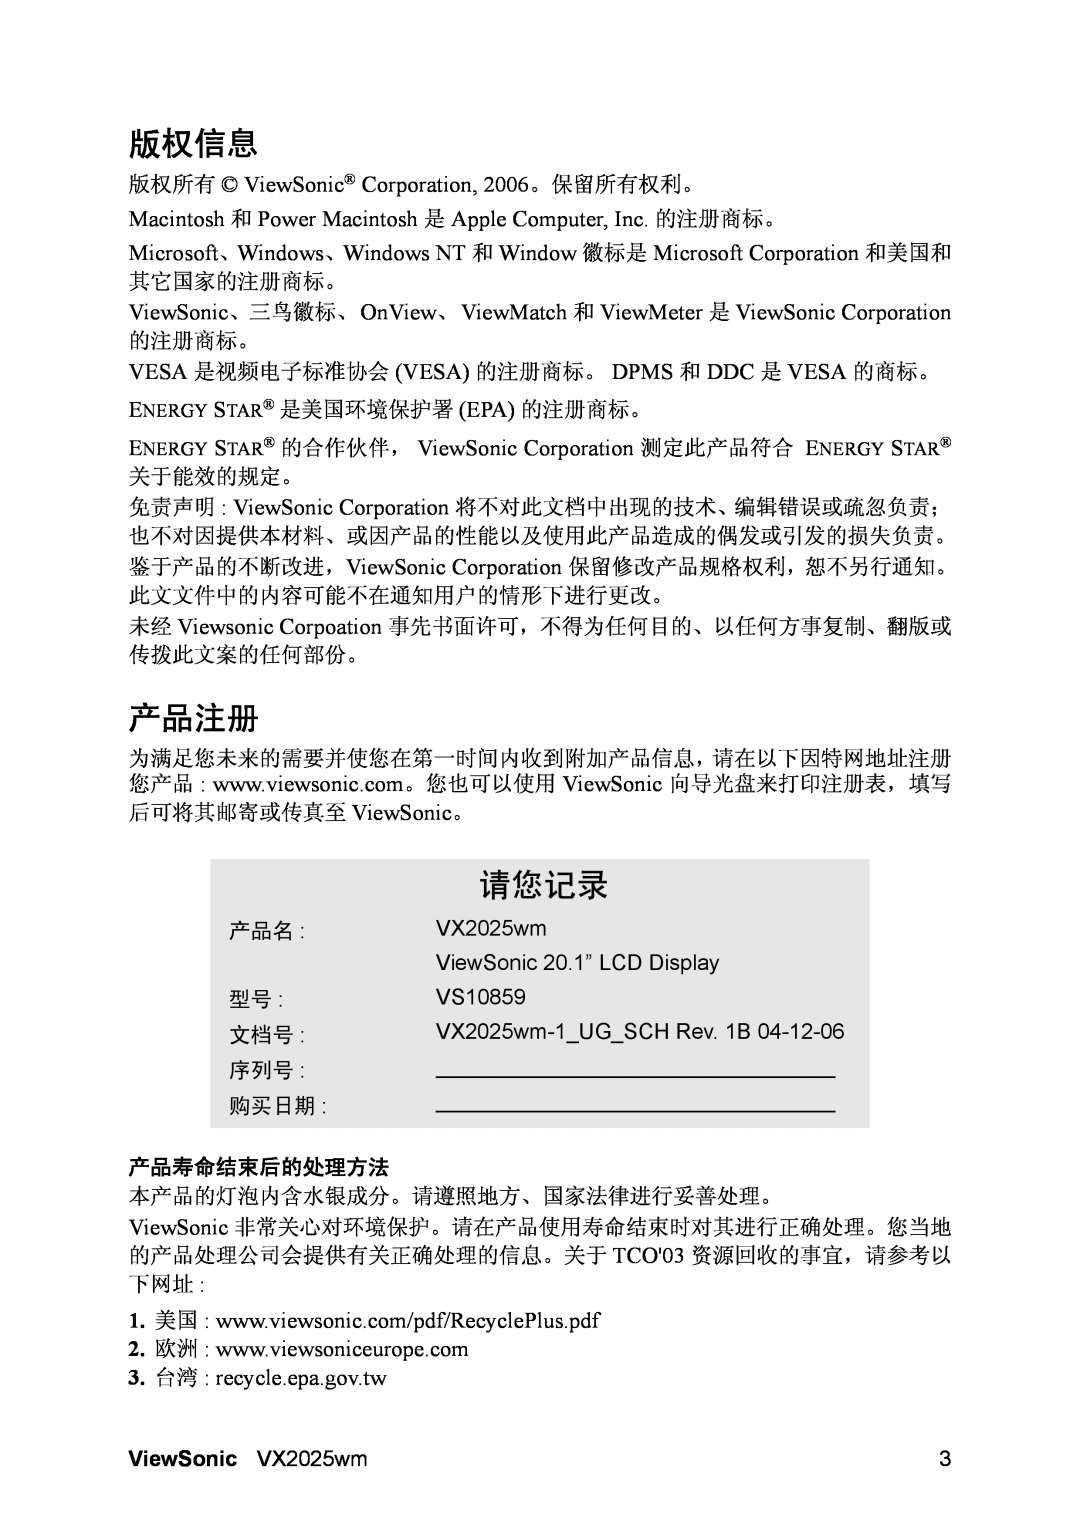 ViewSonic VS10859 manual 版权信息, 产品注册, 请您记录, 3.台湾 recycle.epa.gov.tw, 产品寿命结束后的处理方法, ViewSonic VX2025wm 